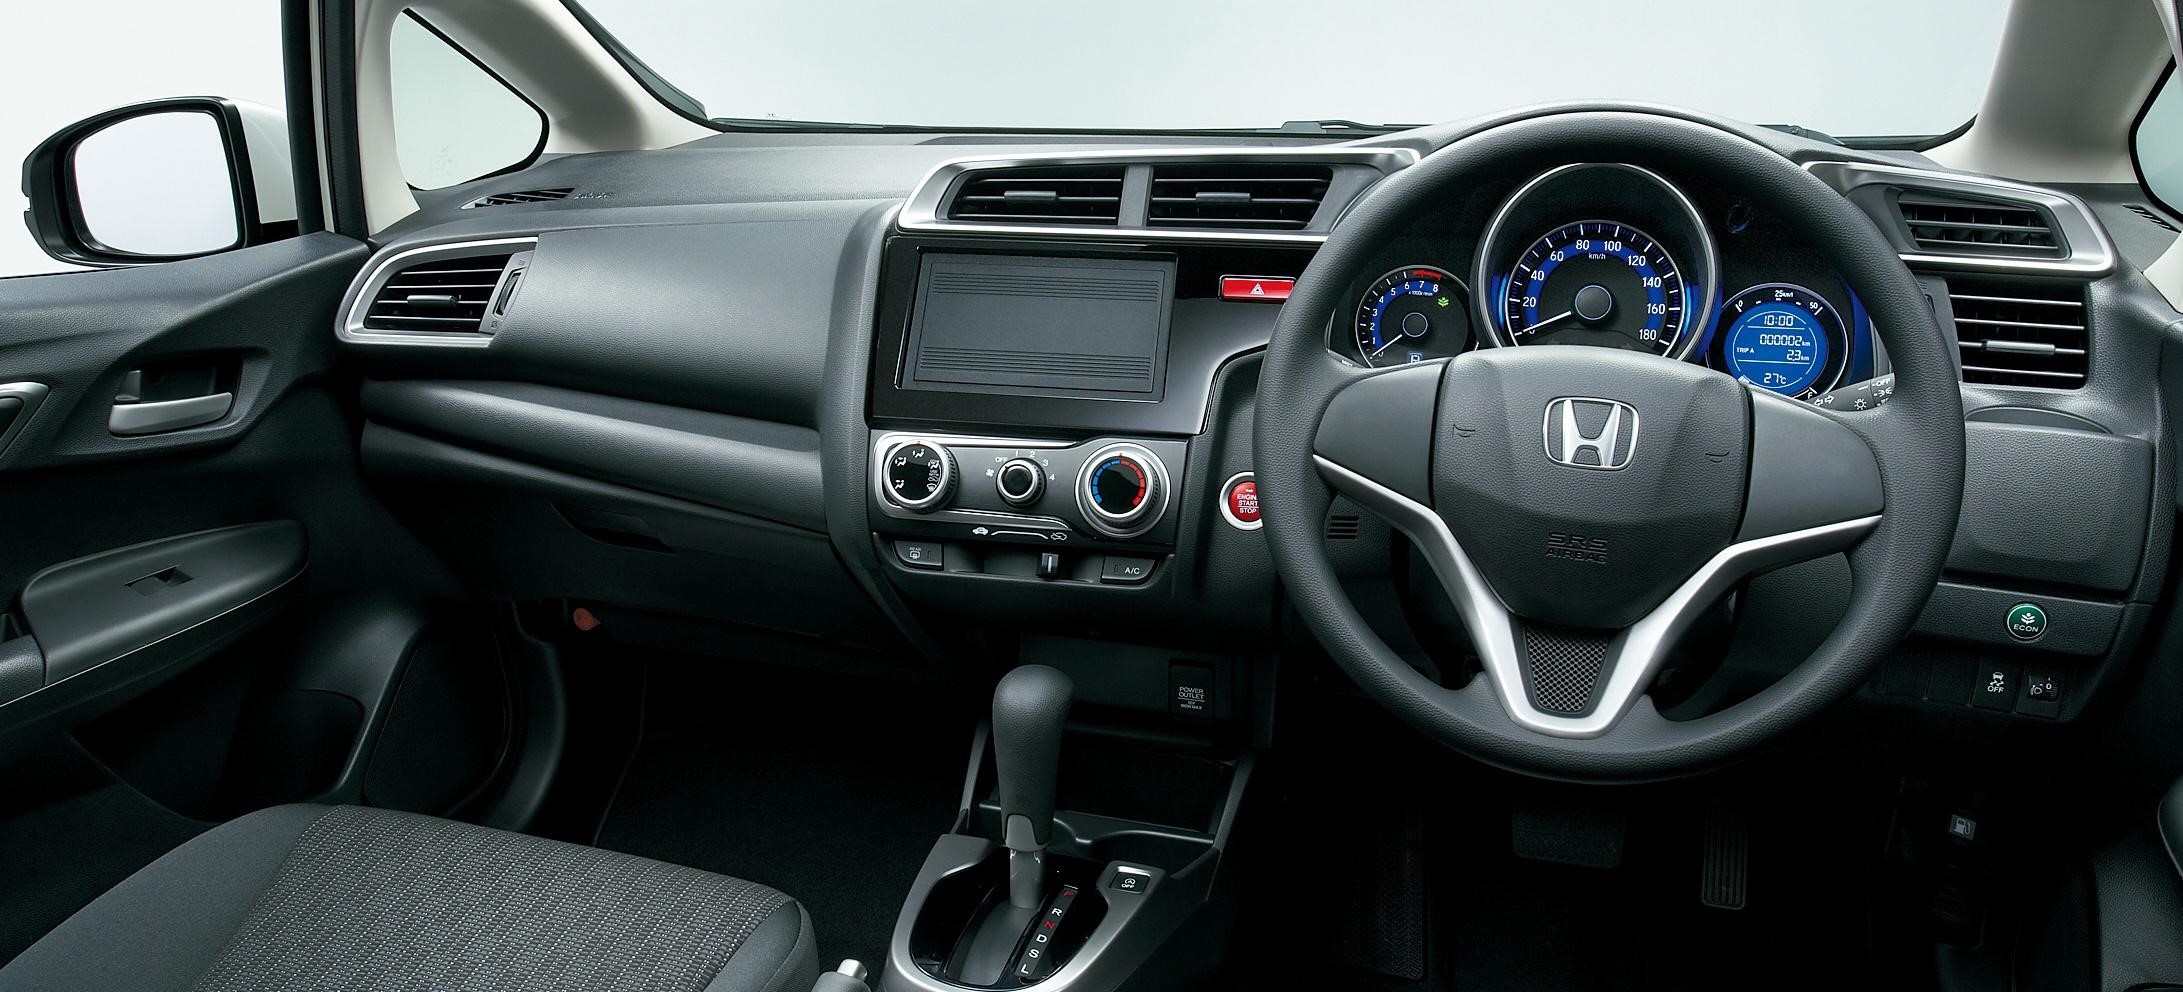 Honda Fit Shuttle Hybrid 2021 Interior